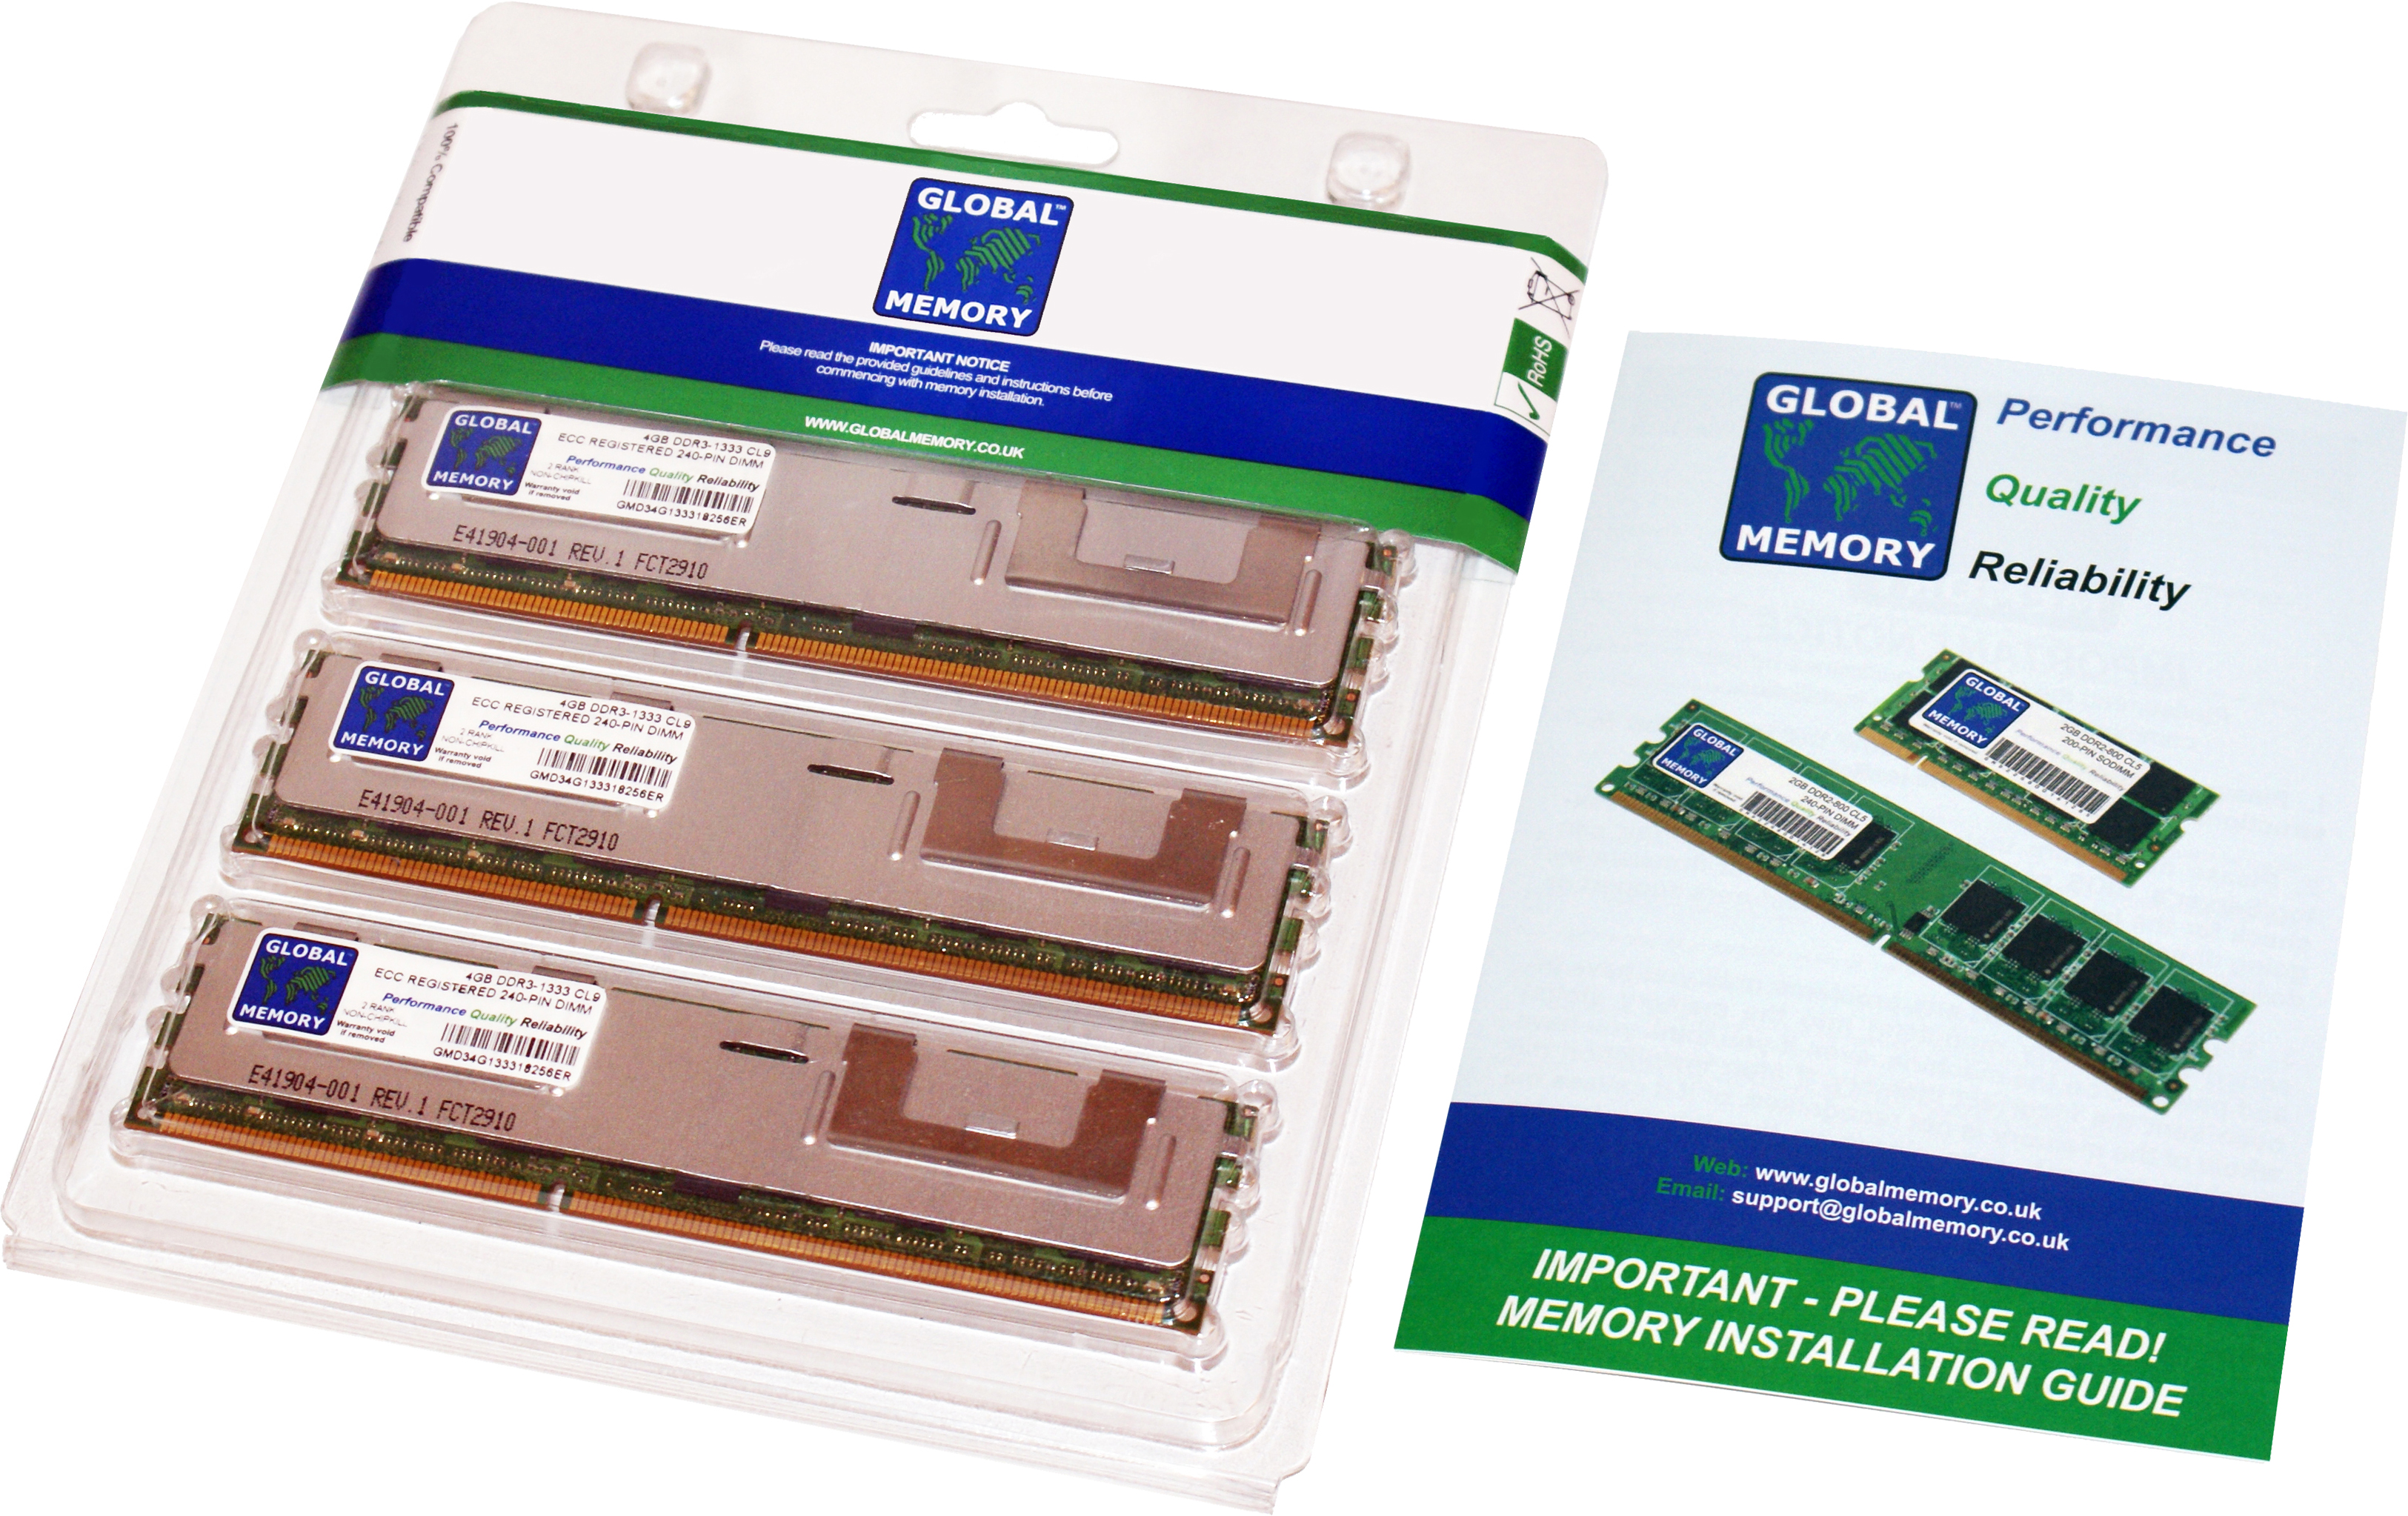 48GB (3 x 16GB) DDR3 1066MHz PC3-8500 240-PIN ECC REGISTERED DIMM (RDIMM) MEMORY RAM KIT FOR FUJITSU SERVERS/WORKSTATIONS (12 RANK KIT NON-CHIPKILL)